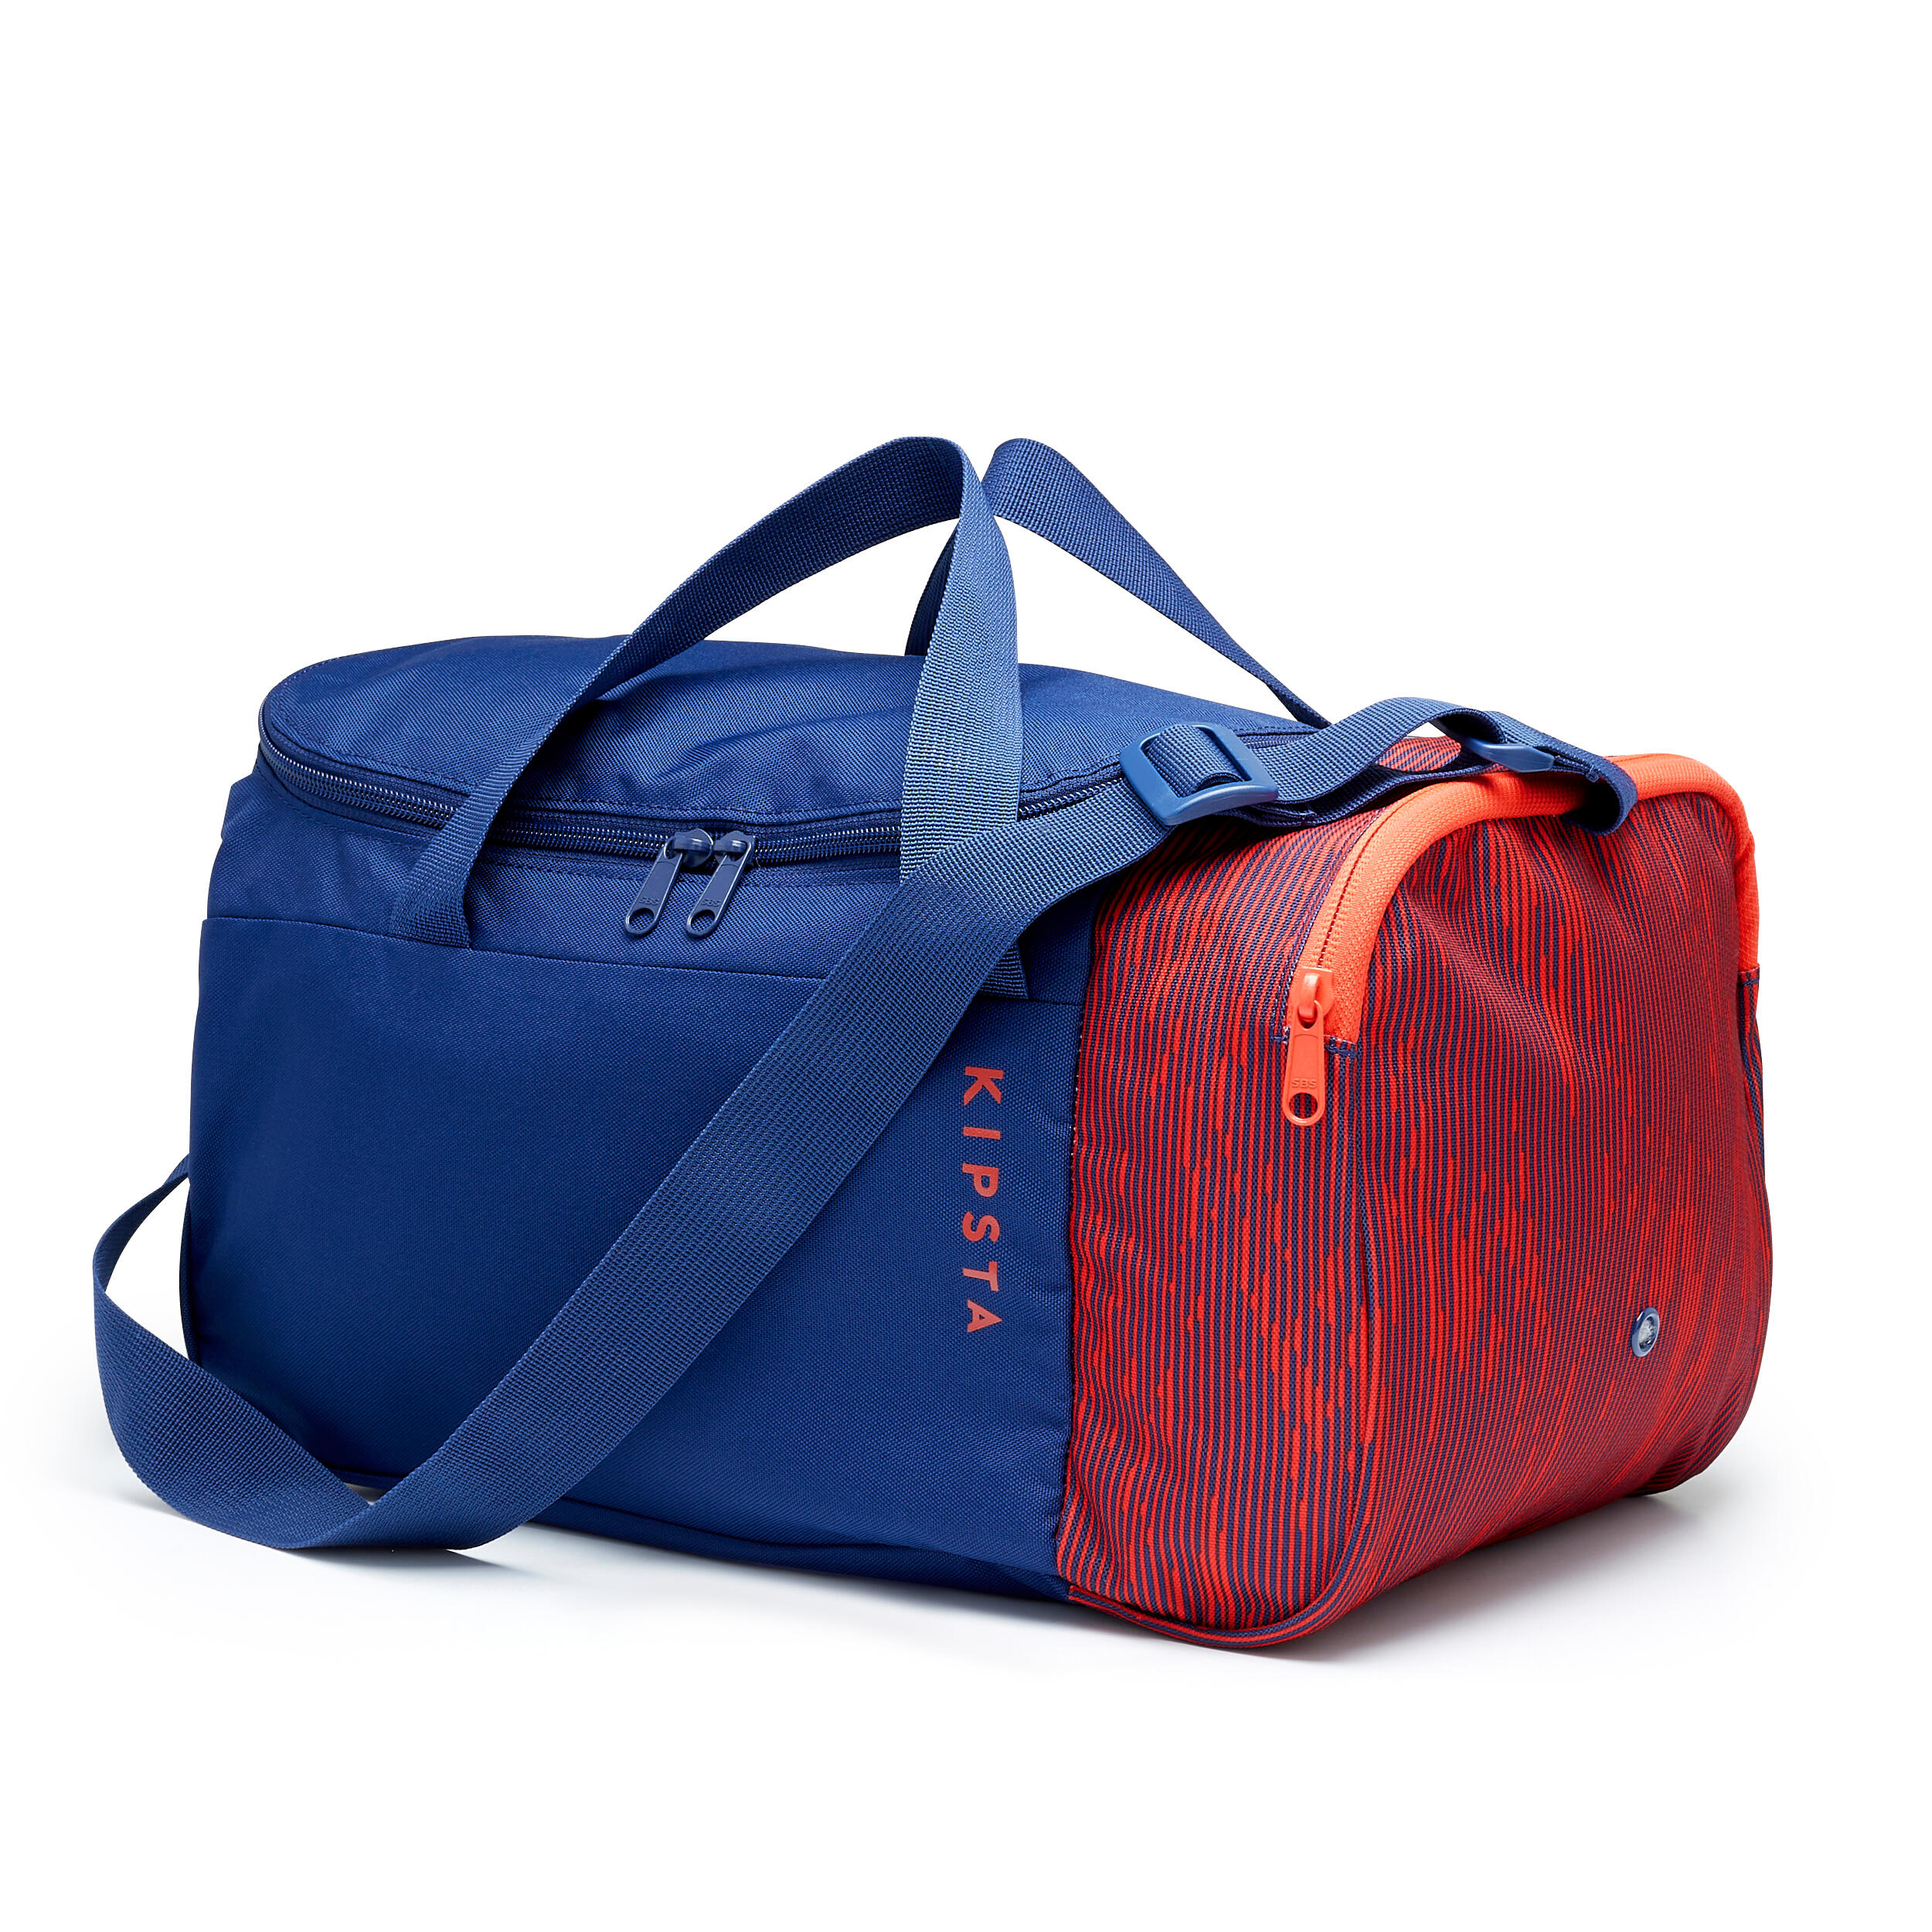 Forclaz Travel 100 Compact Waterproof Backpack - 20L | Decathlon Australia